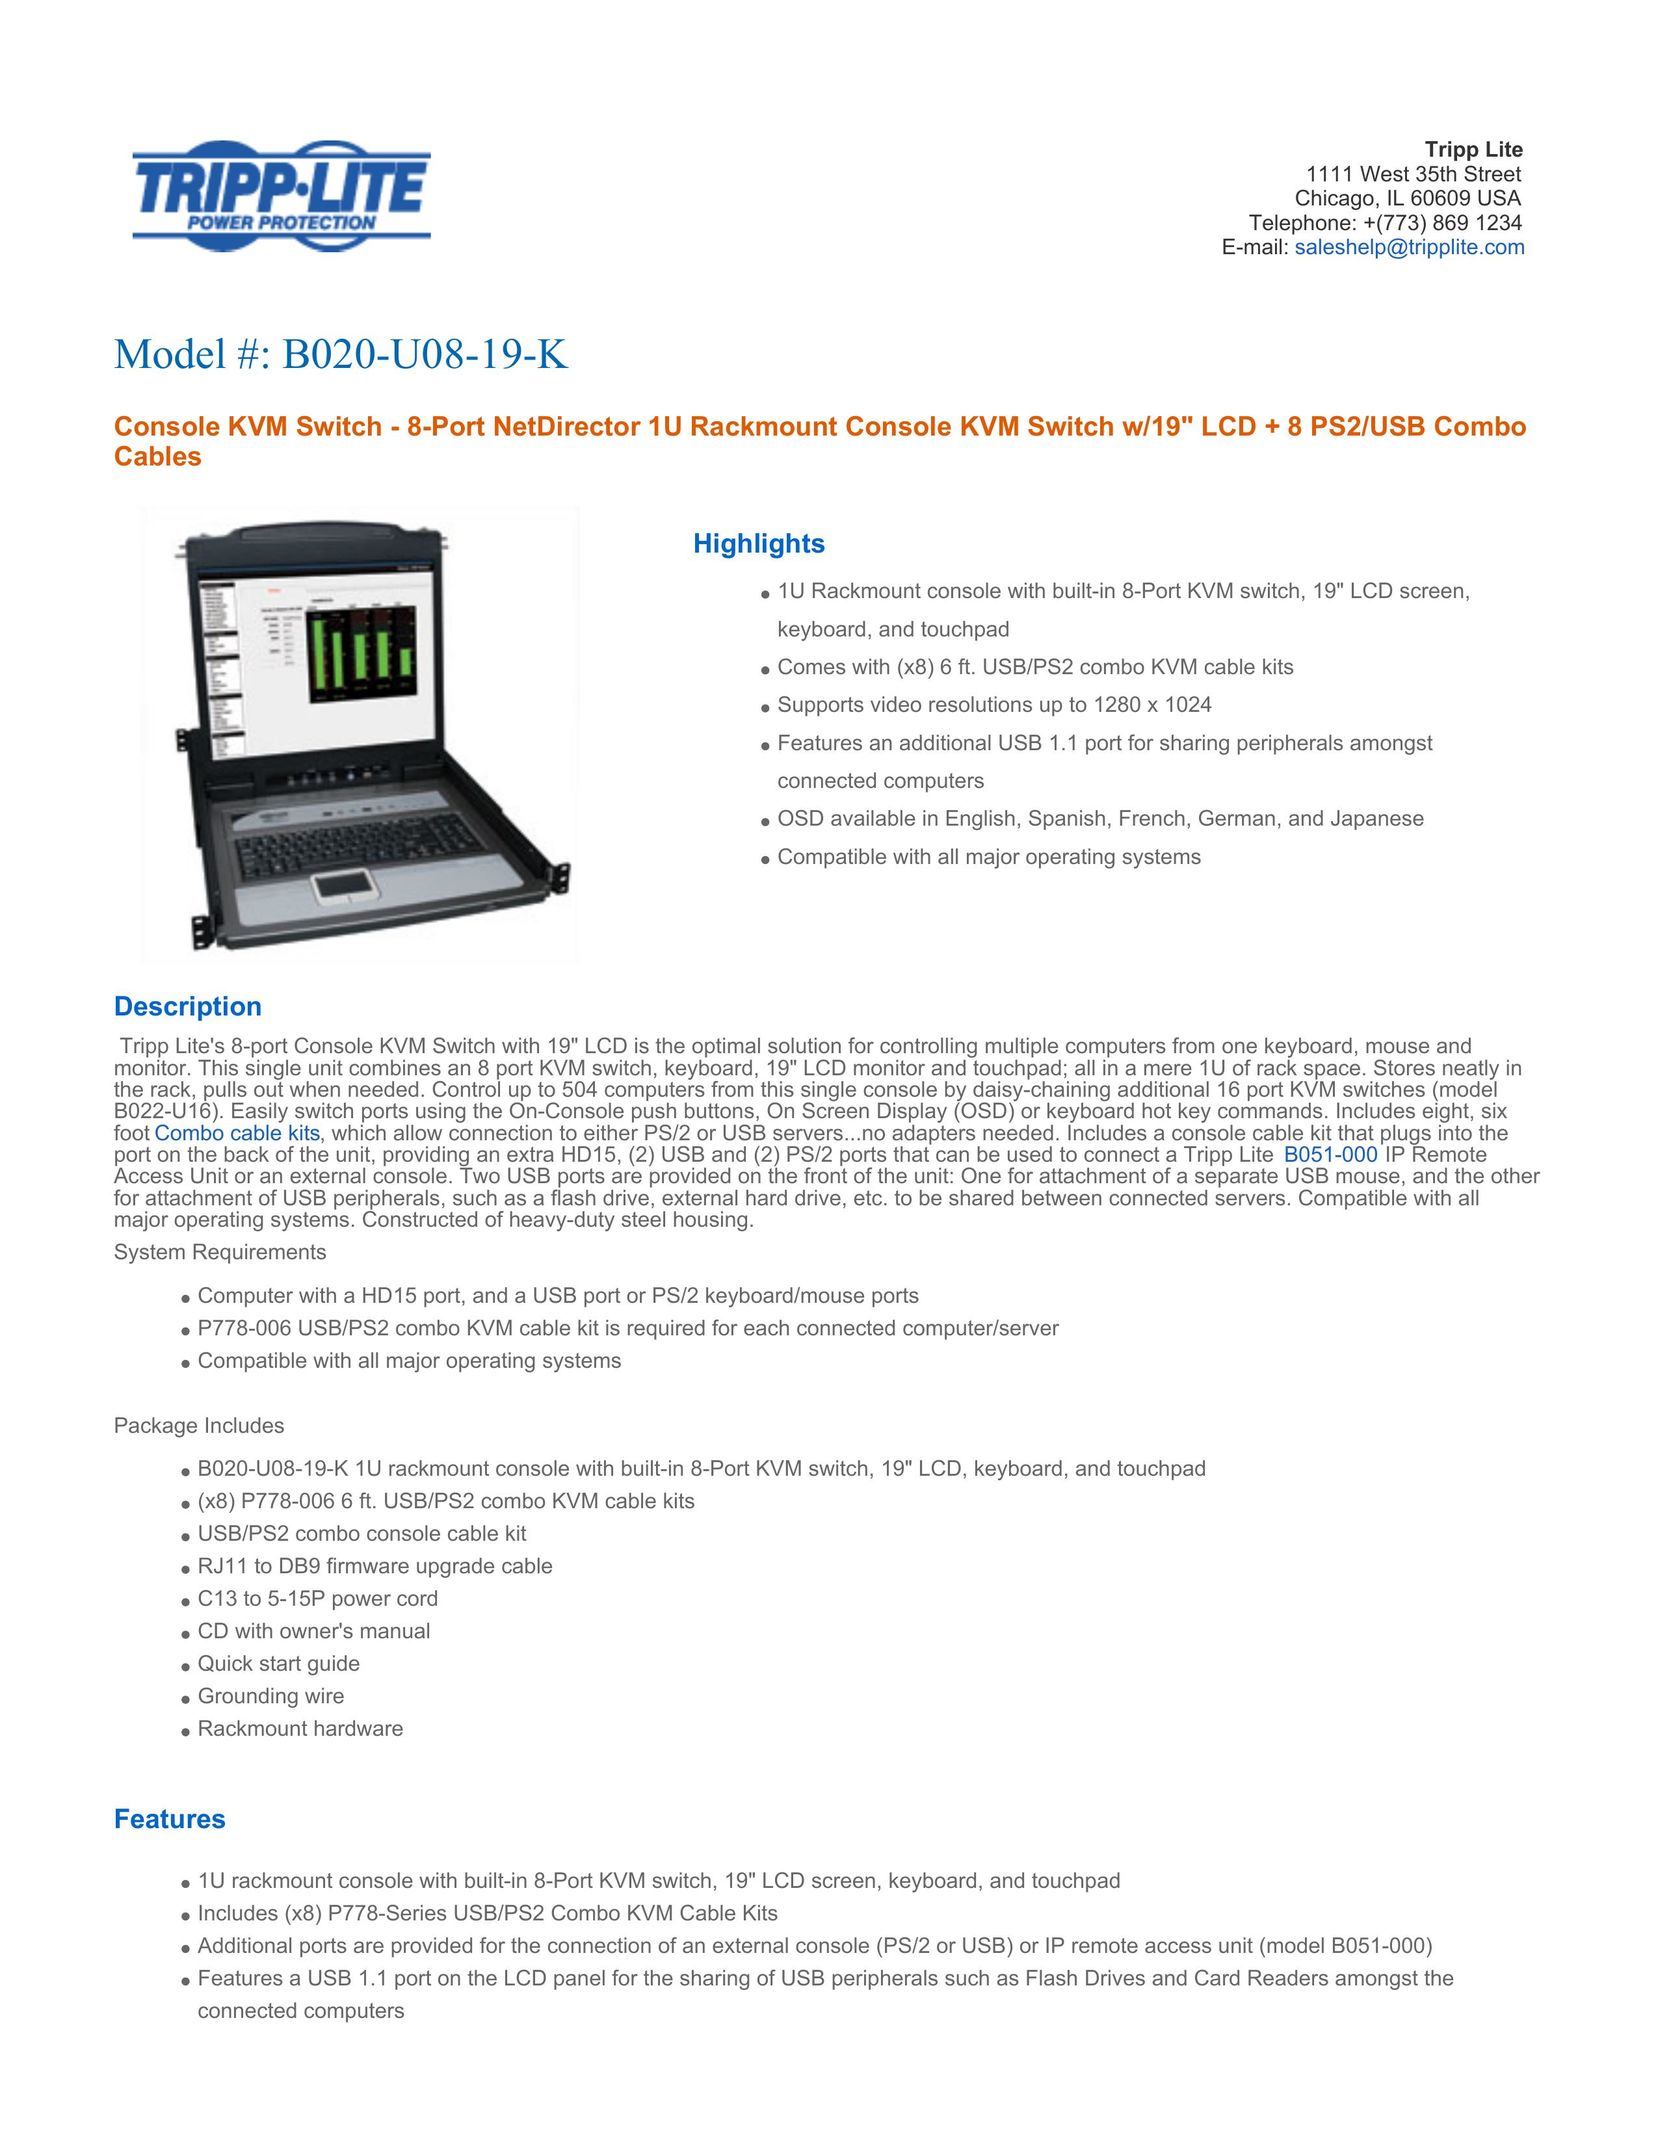 Tripp Lite B020-U08-19-K Switch User Manual